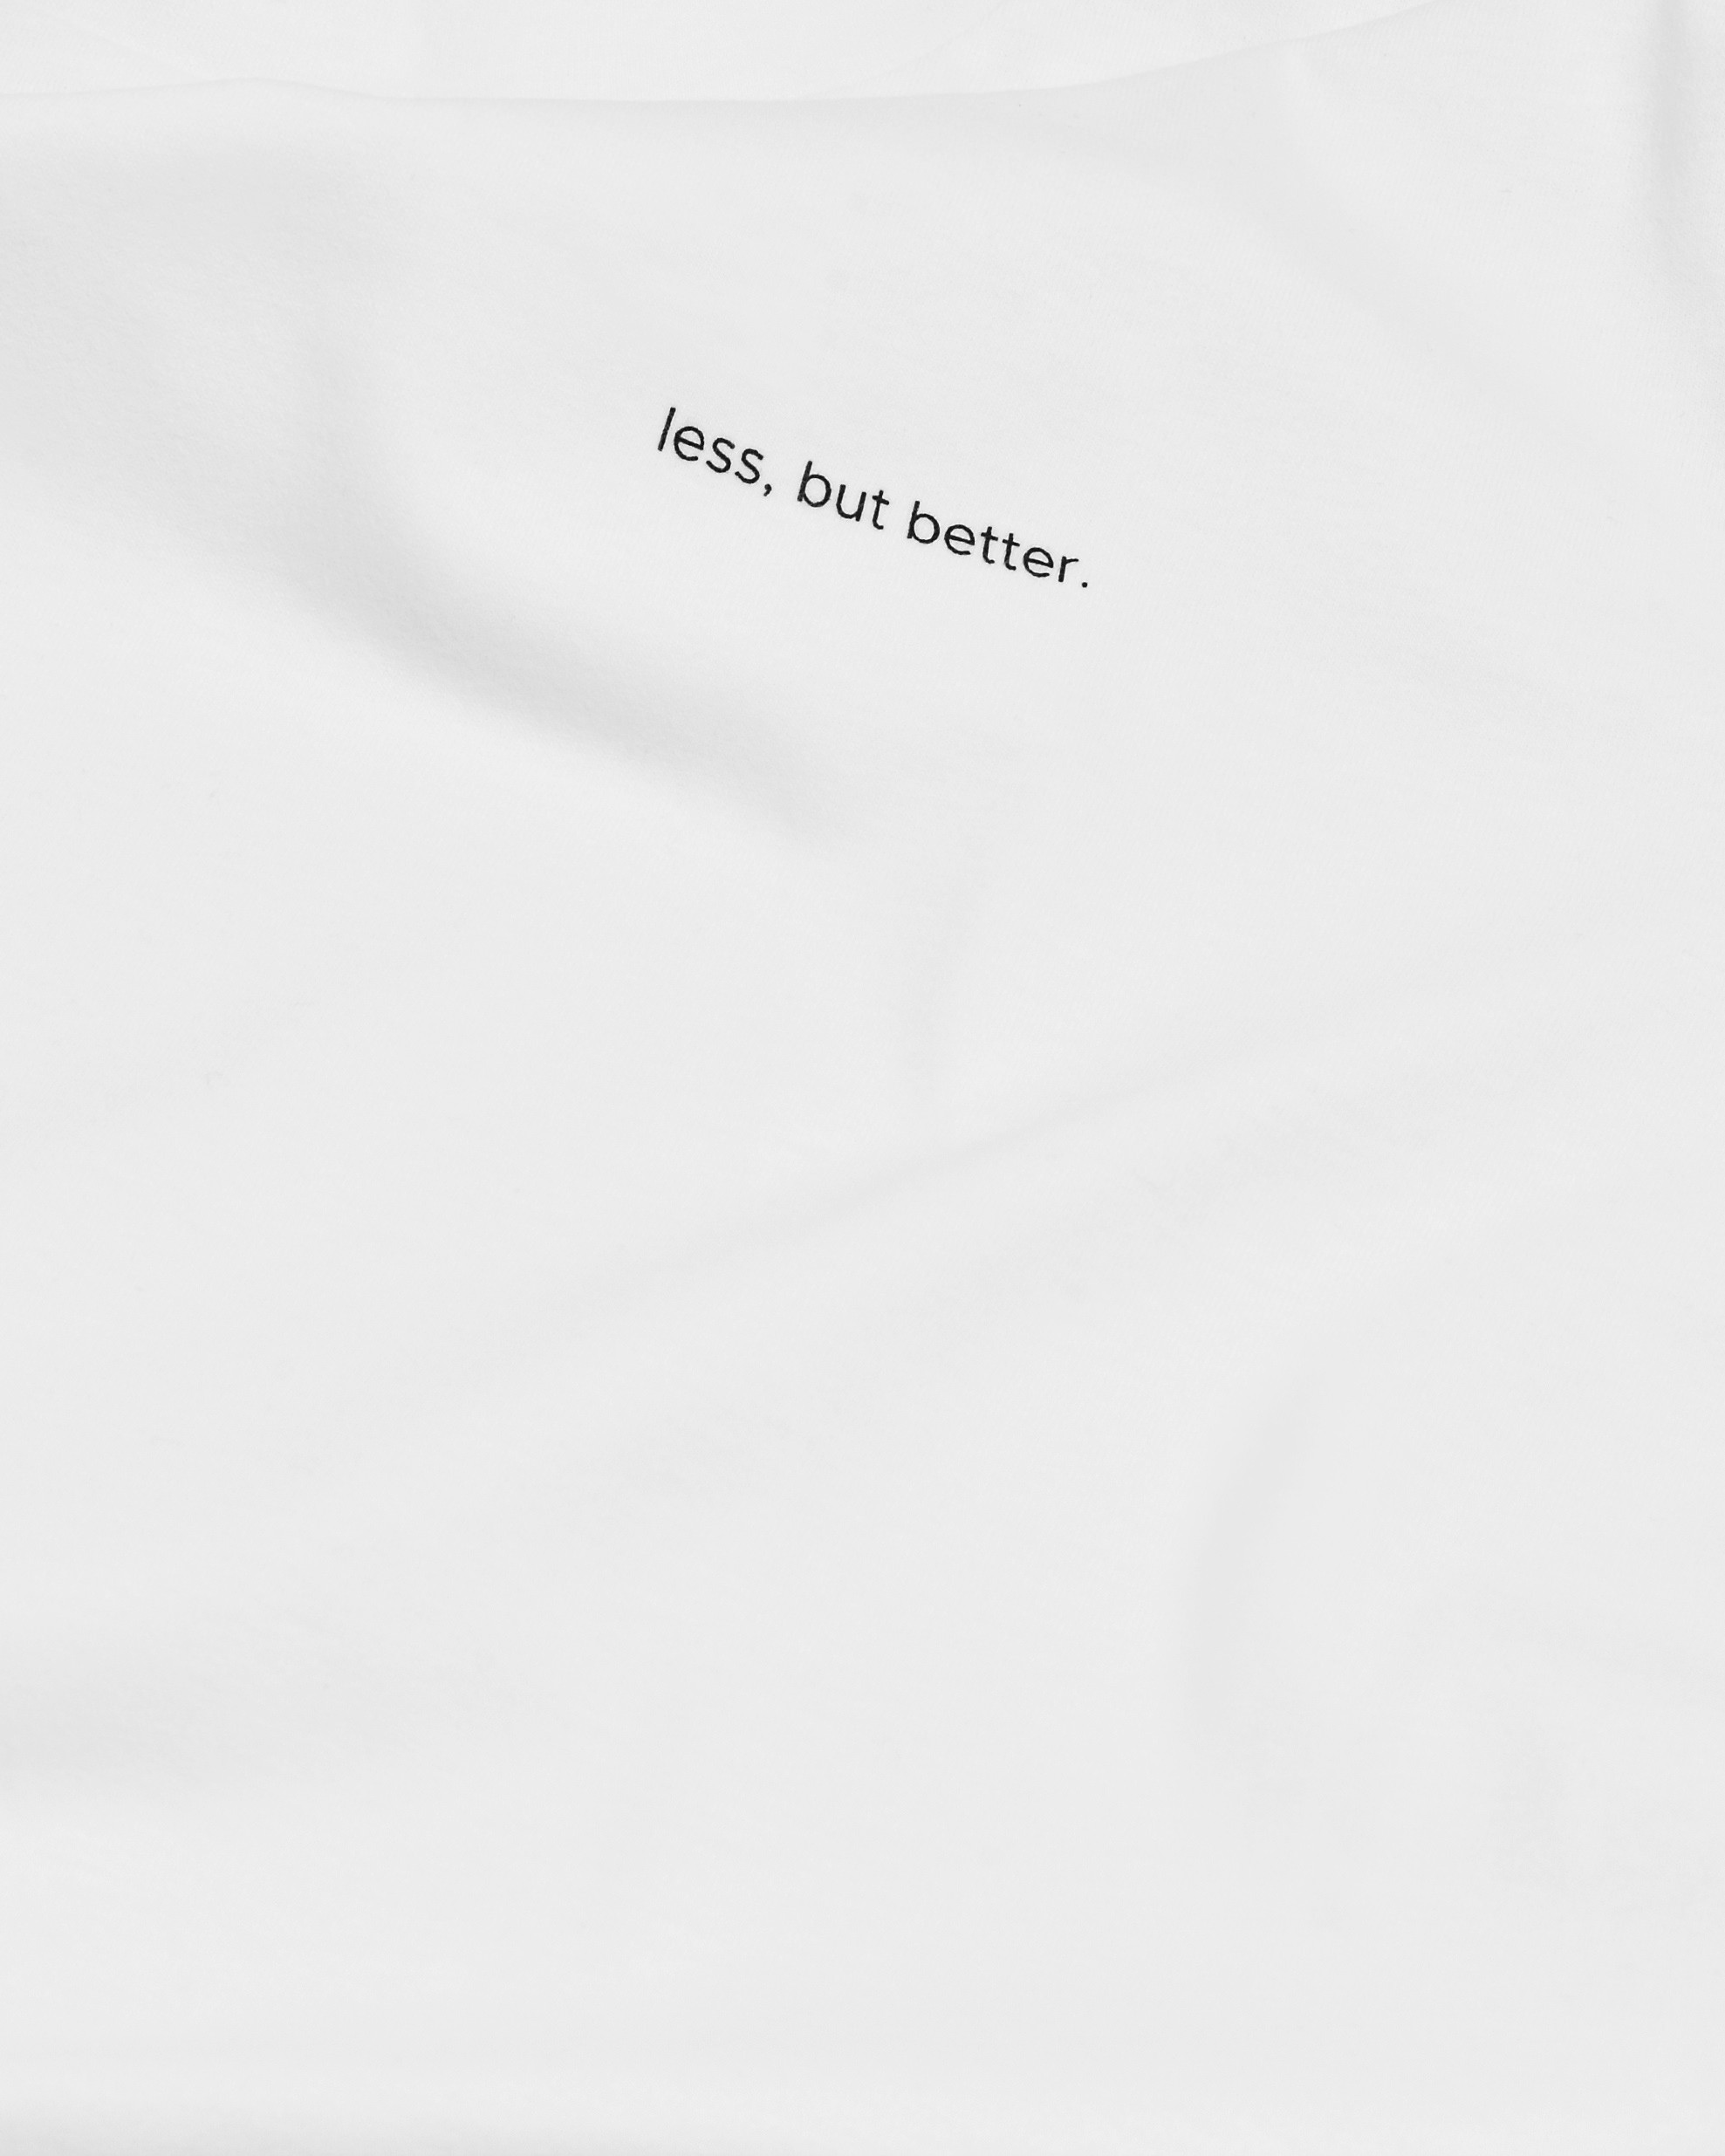 Camiseta Dieter Rams Branca